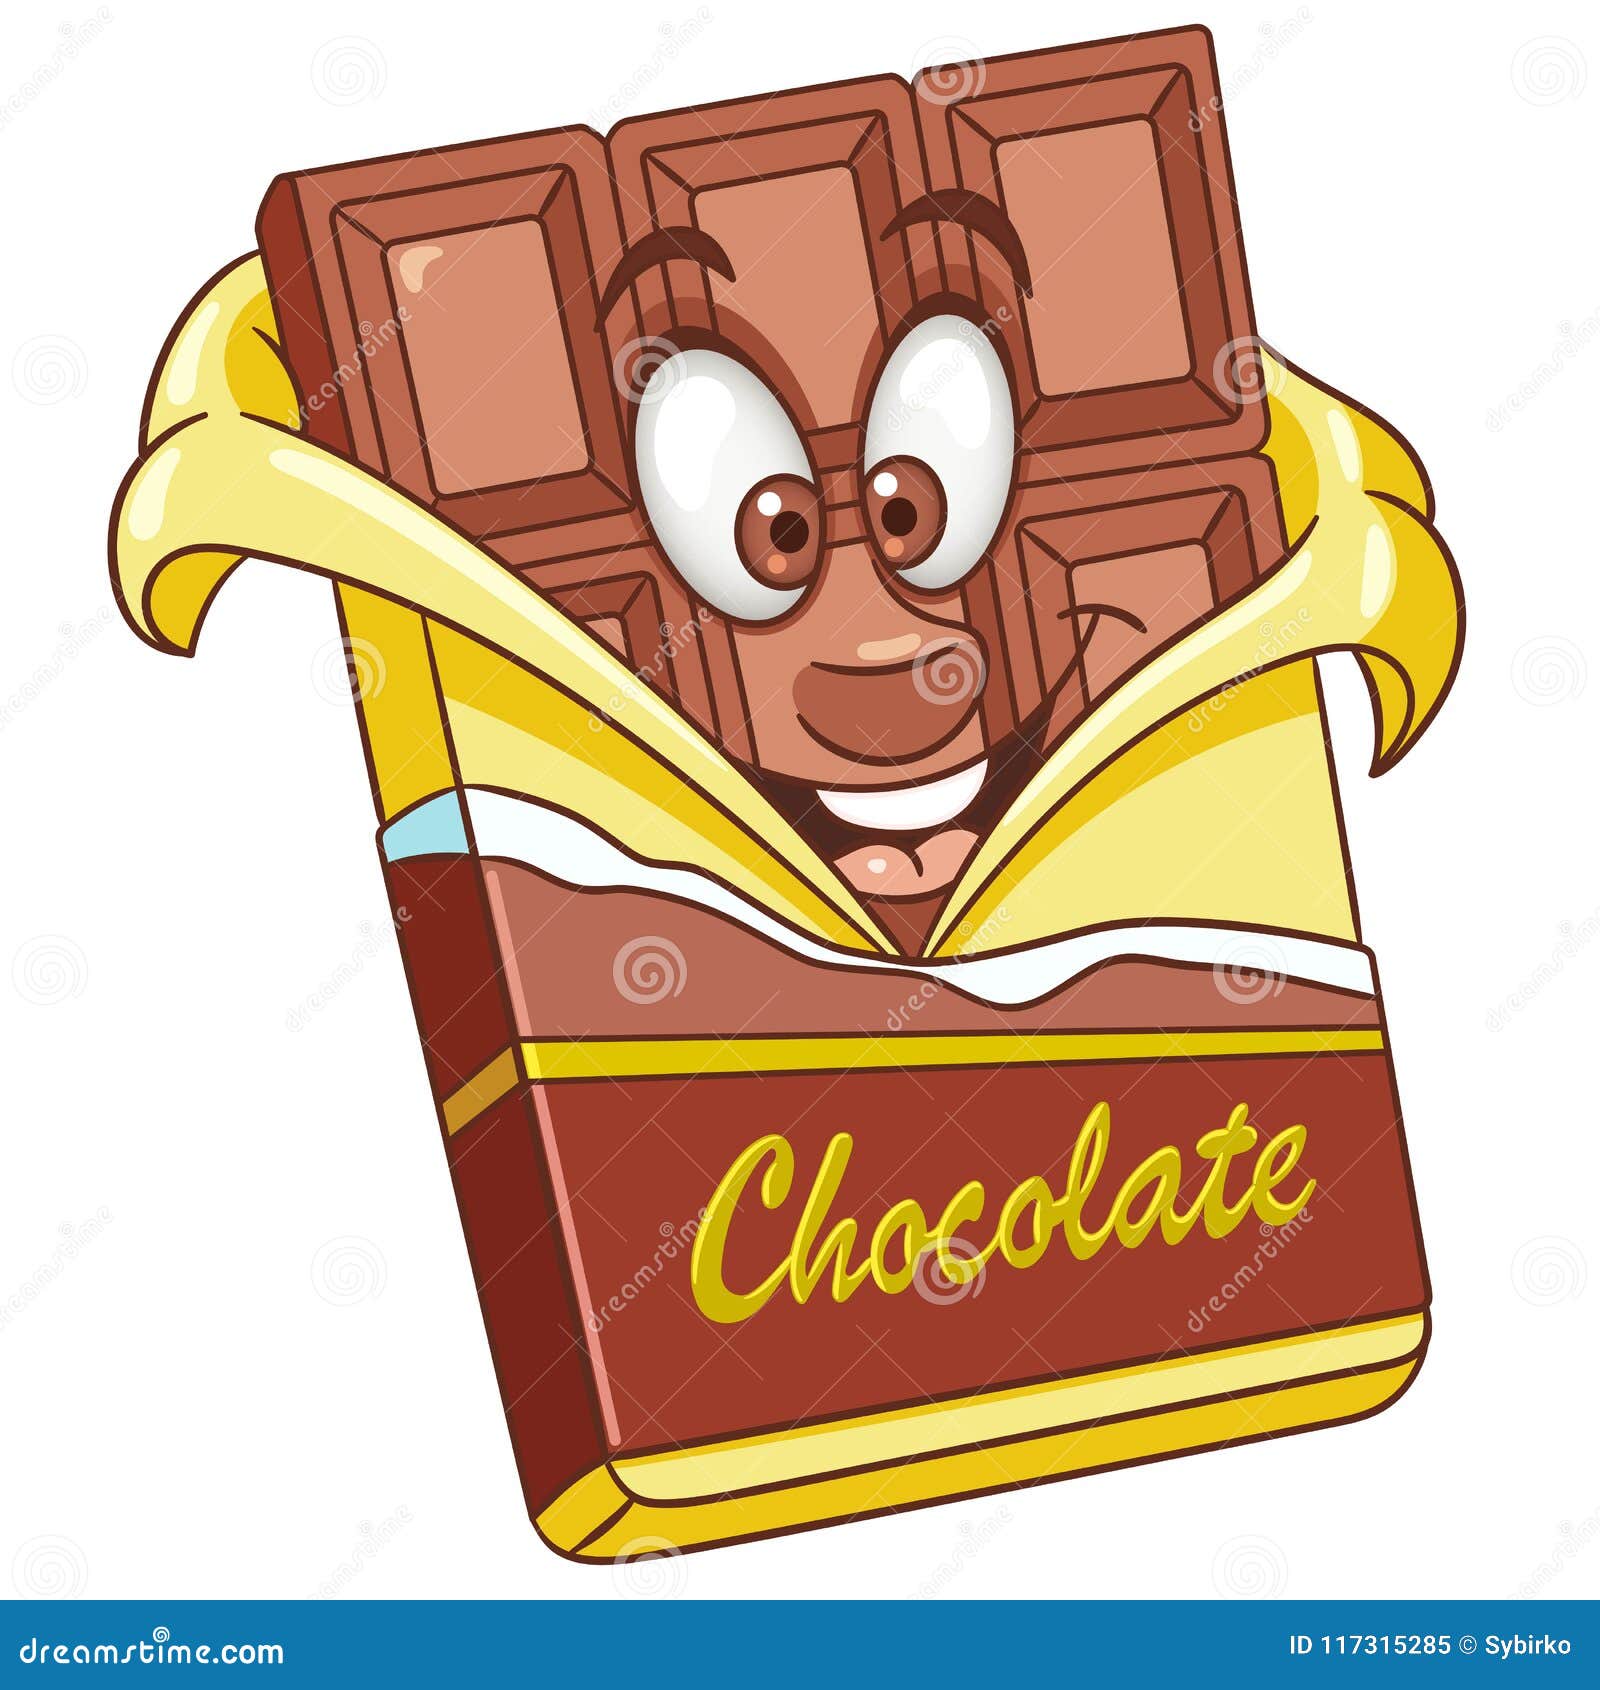 Cartoon chocolate bar stock vector. Illustration of diet - 117315285